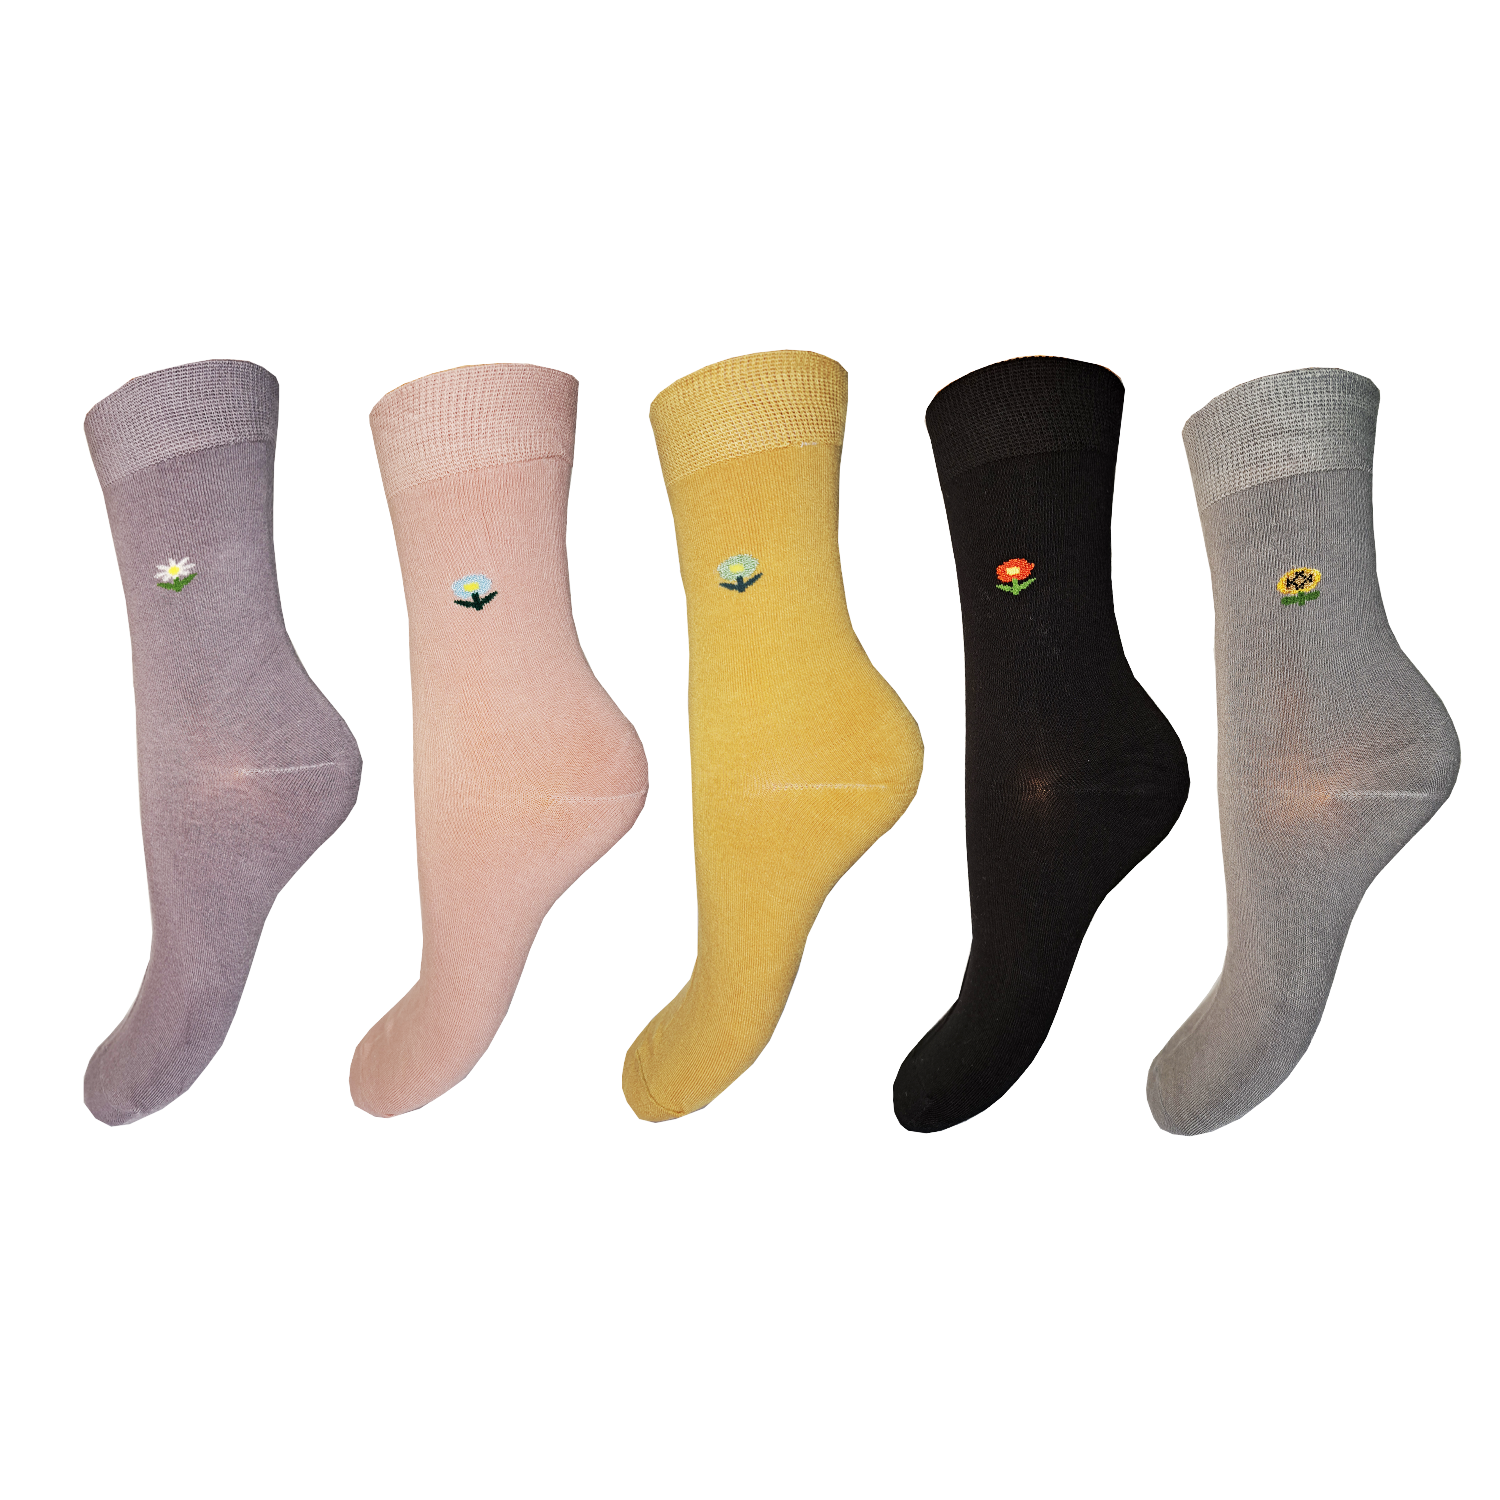 Dámské bambusové ponožky Aura.Via - NN7885, mix barev Barva: Mix barev, Velikost: 38-41